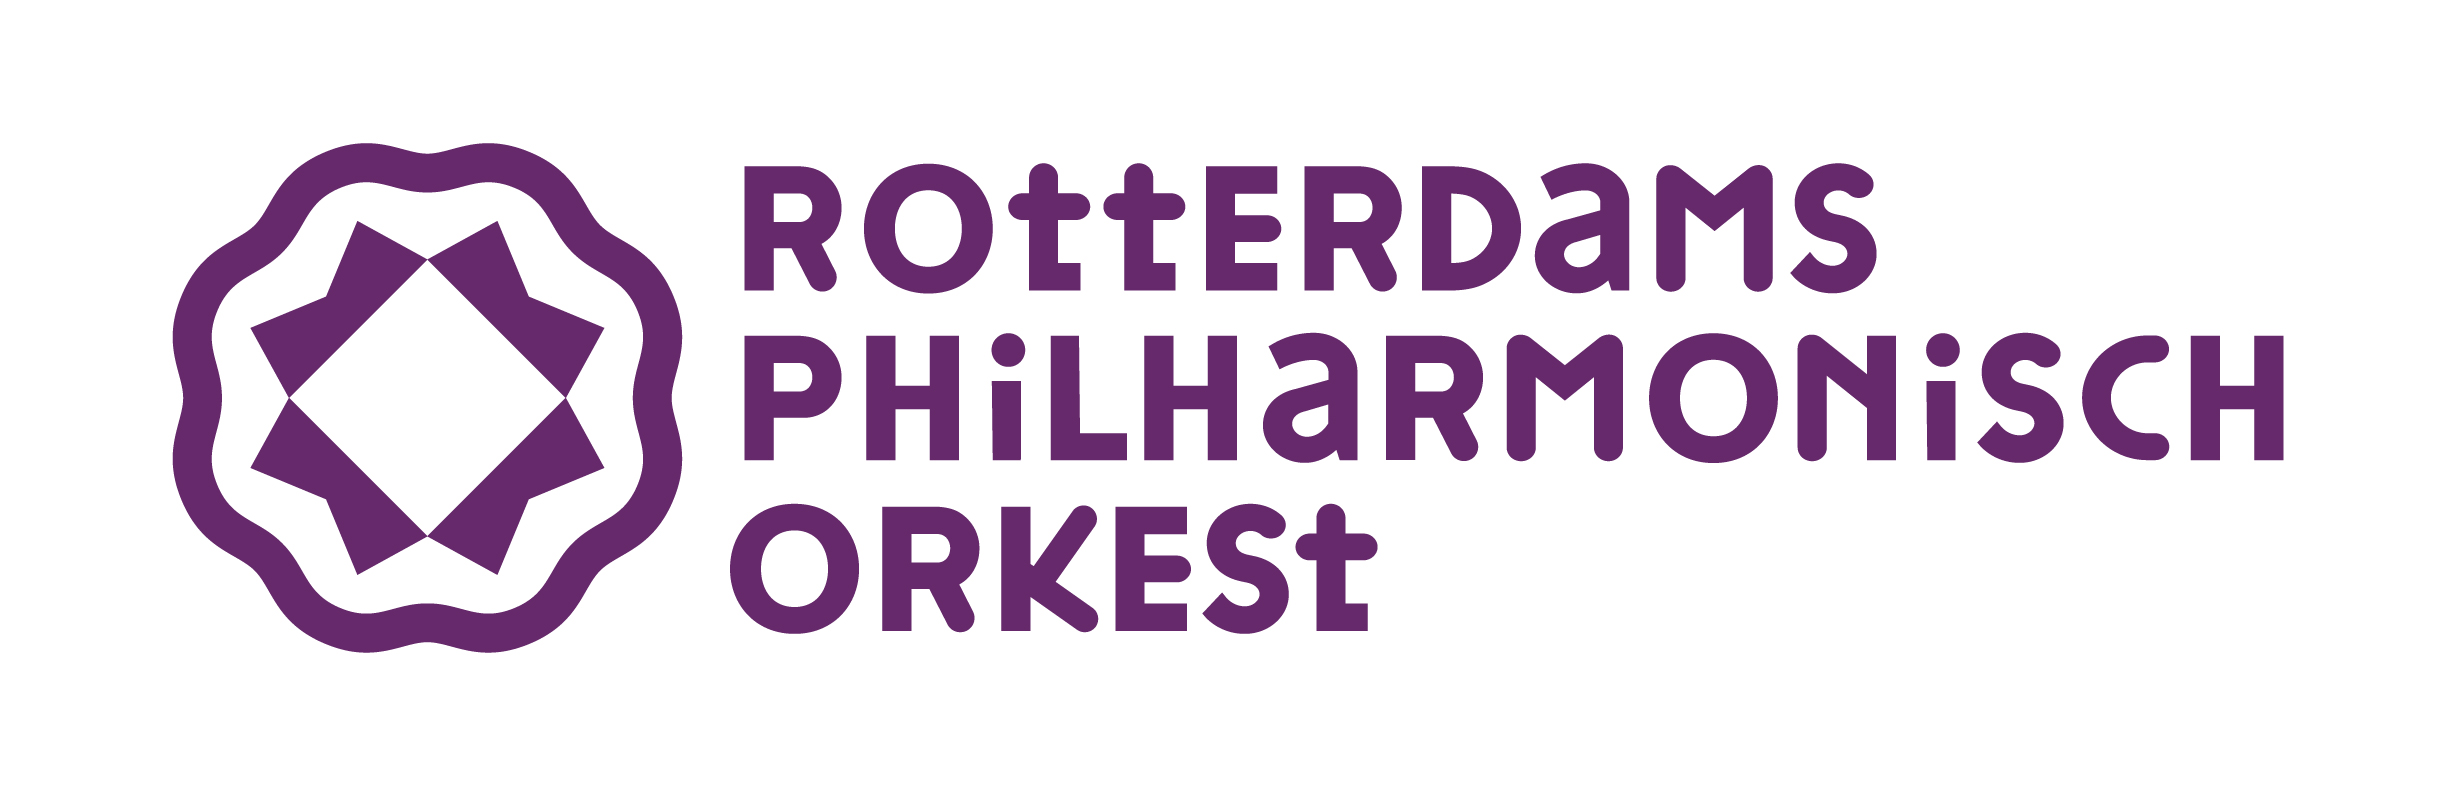 Rotterdam Philharmonic Orchestra / Rotterdams Philharmonisch Orkest